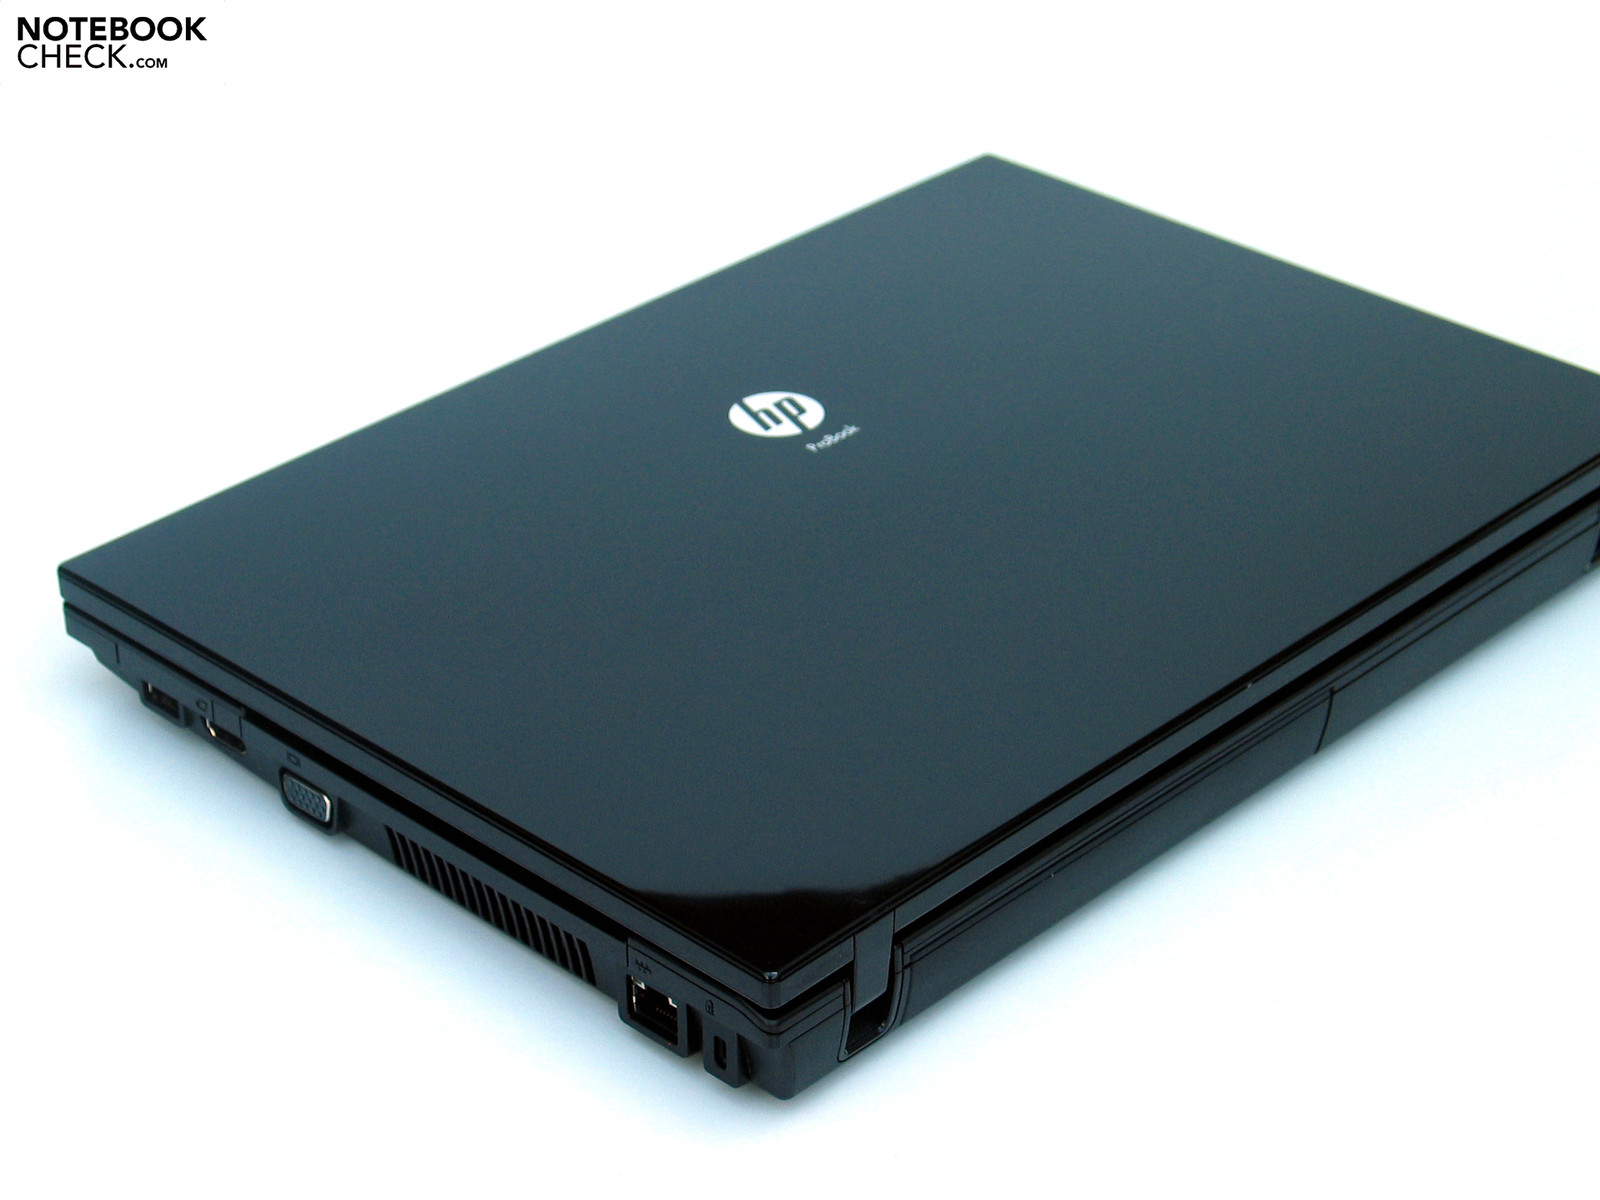 Compaq 516 Notebook PC